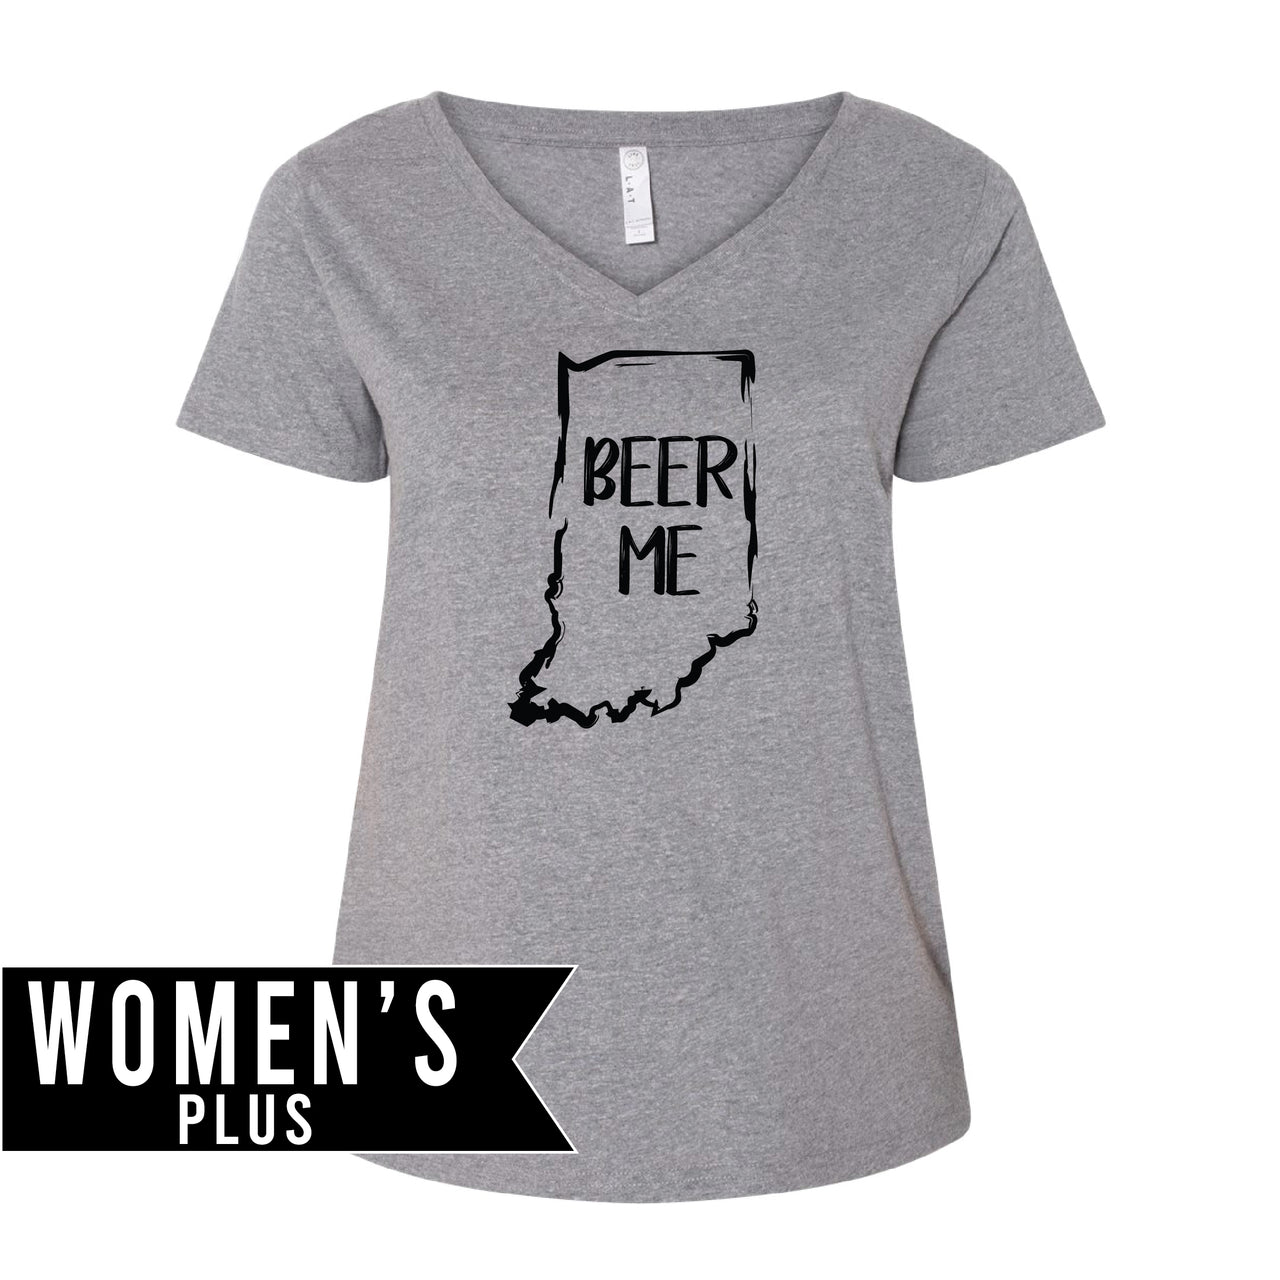 Plus Size Women's Premium Jersey V-Neck Tee - Indiana Beer